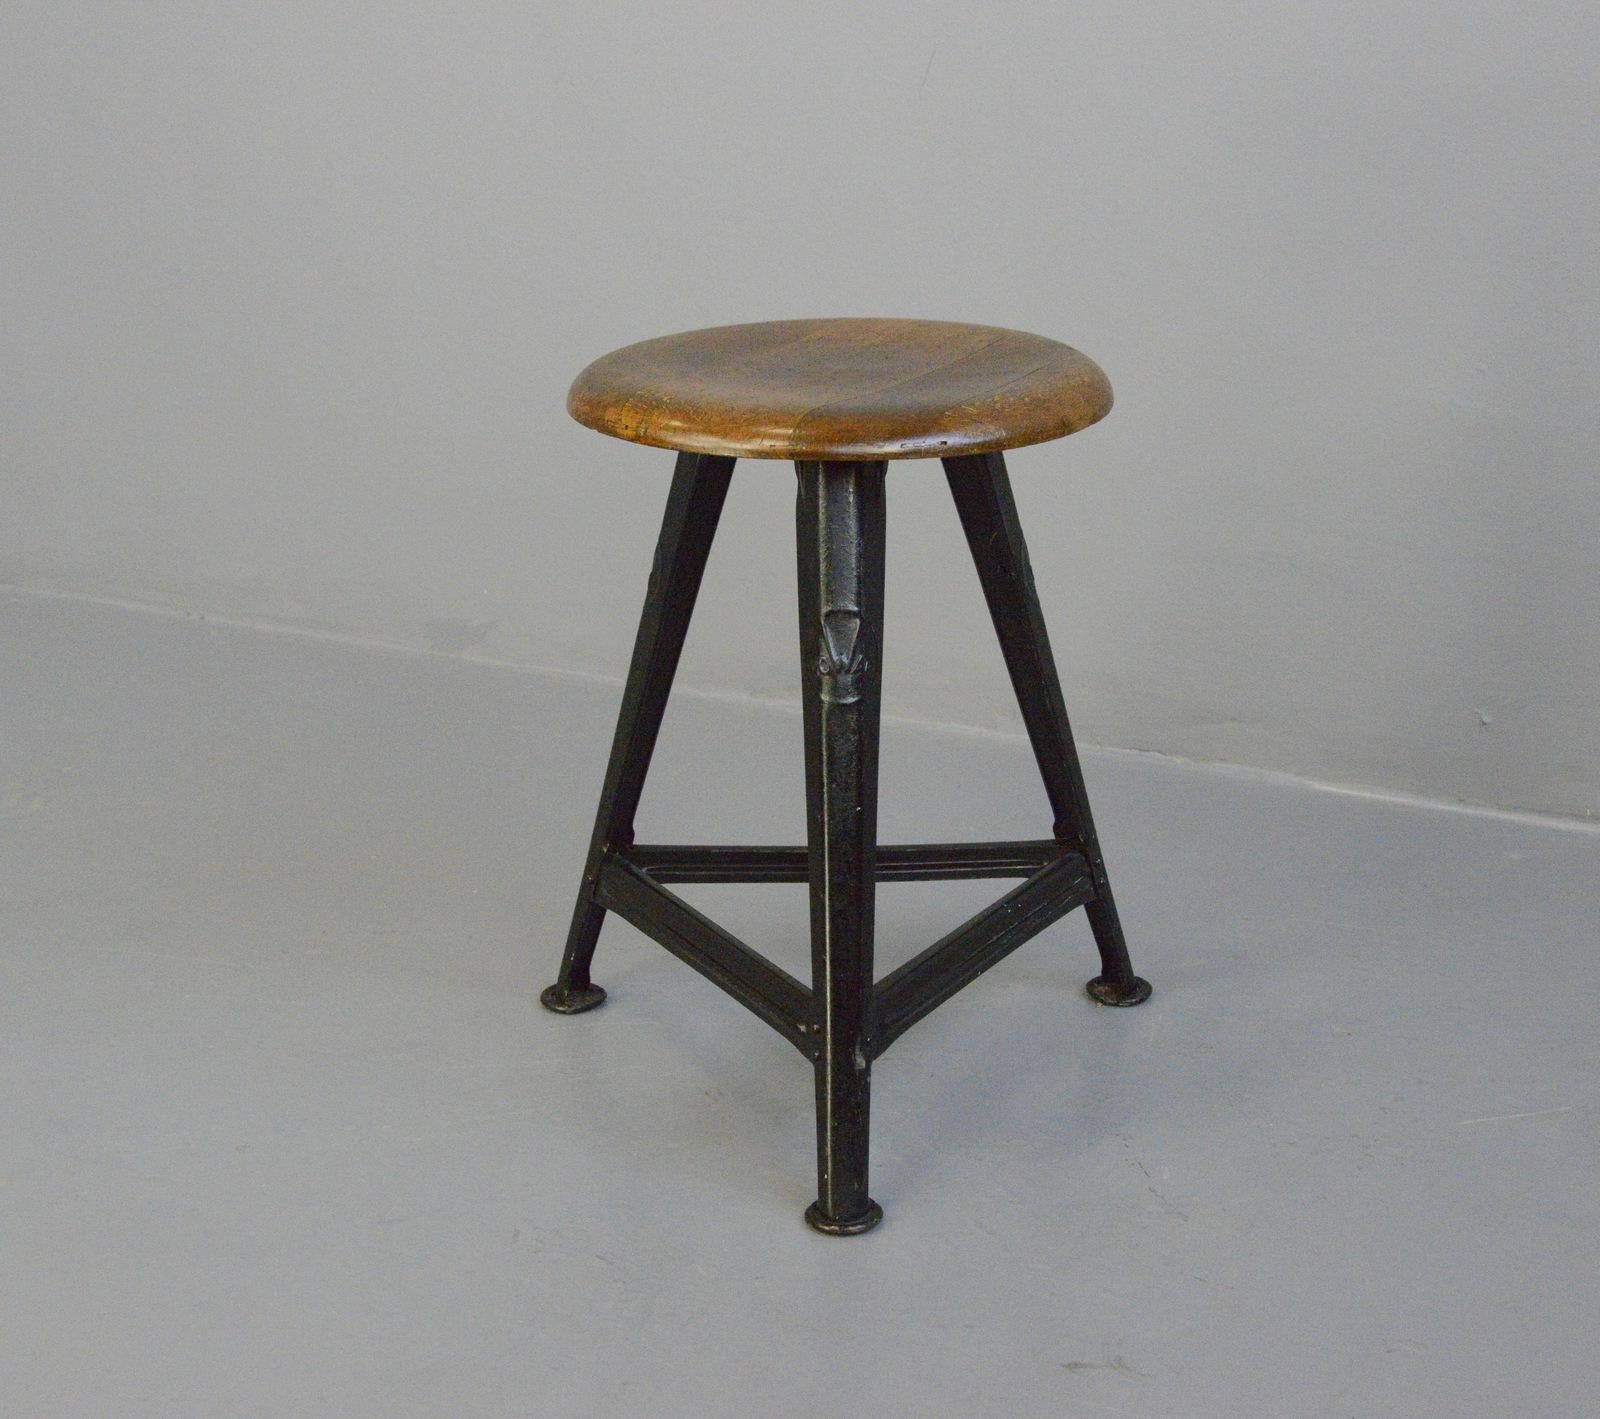 1920s stool